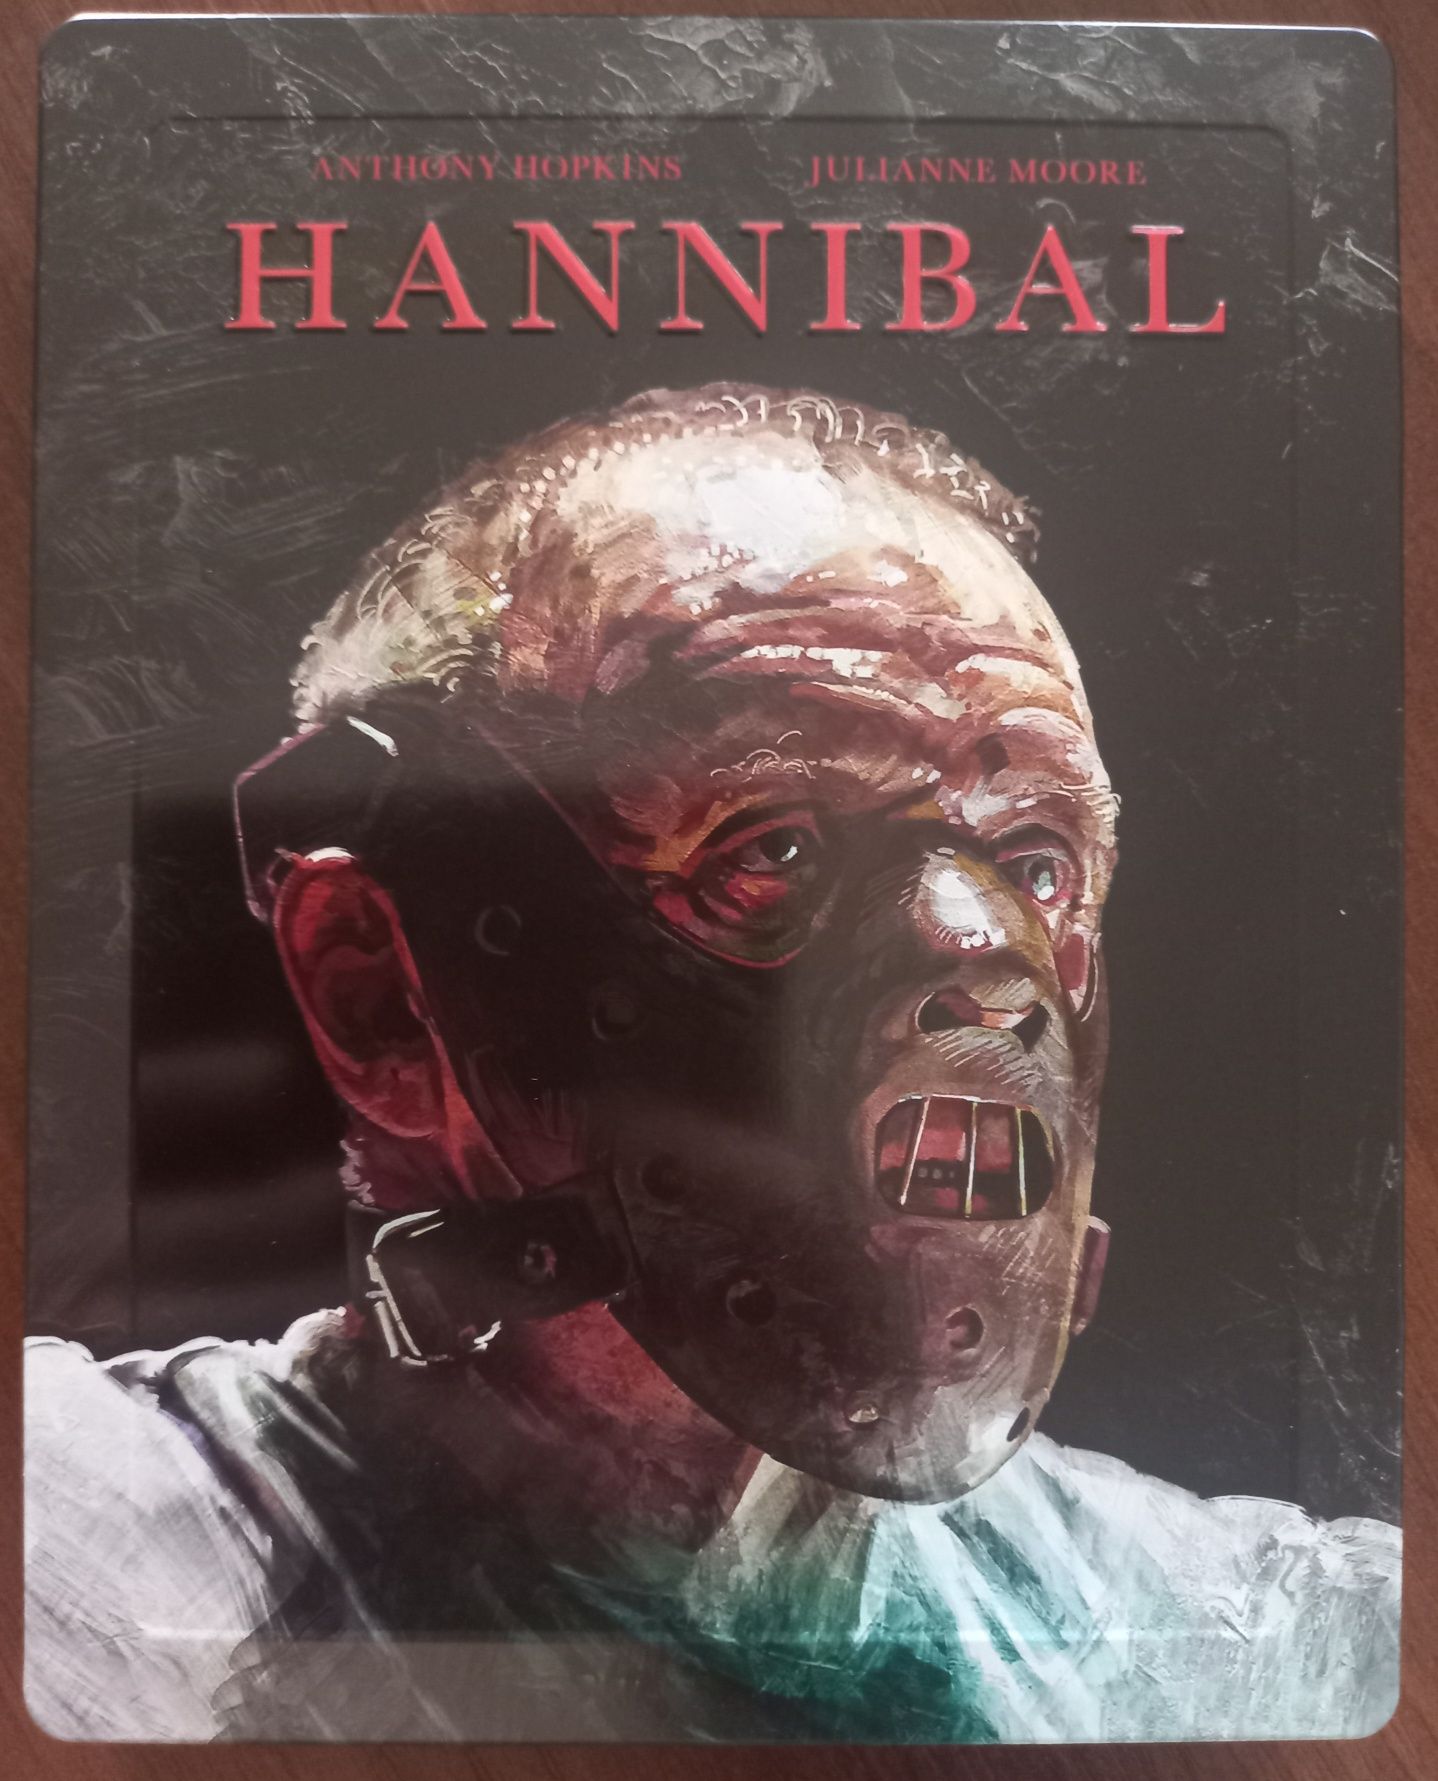 Hannibal 4K (2001)(1xBR 4K+1xBR) Limited Collector's Edition Steelbook